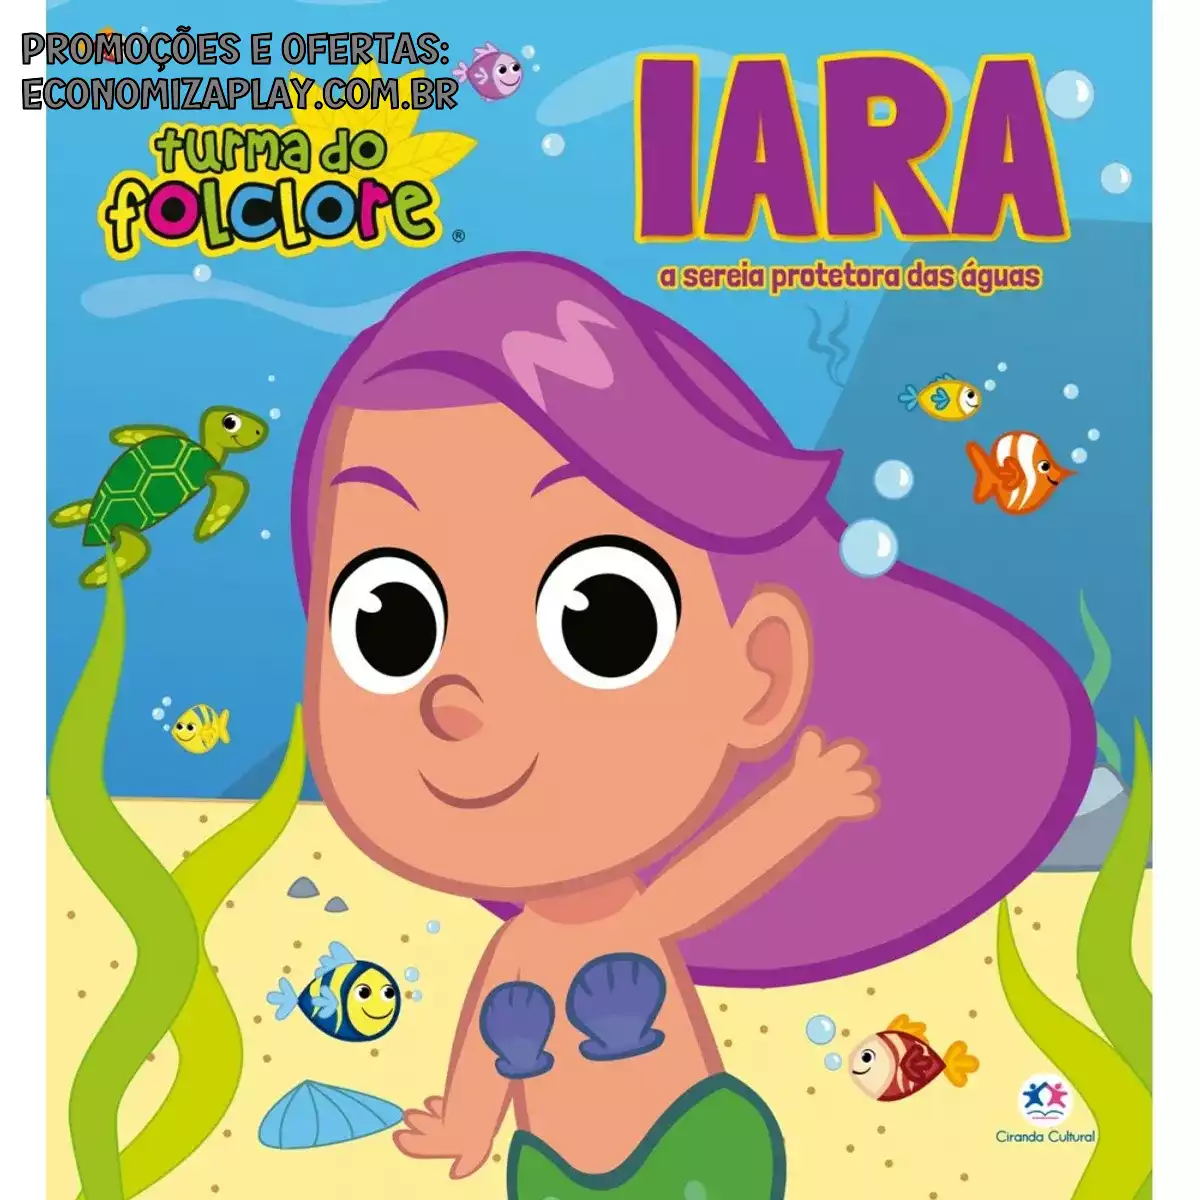 Livro Literatura infantil Turma do Folclore Iara